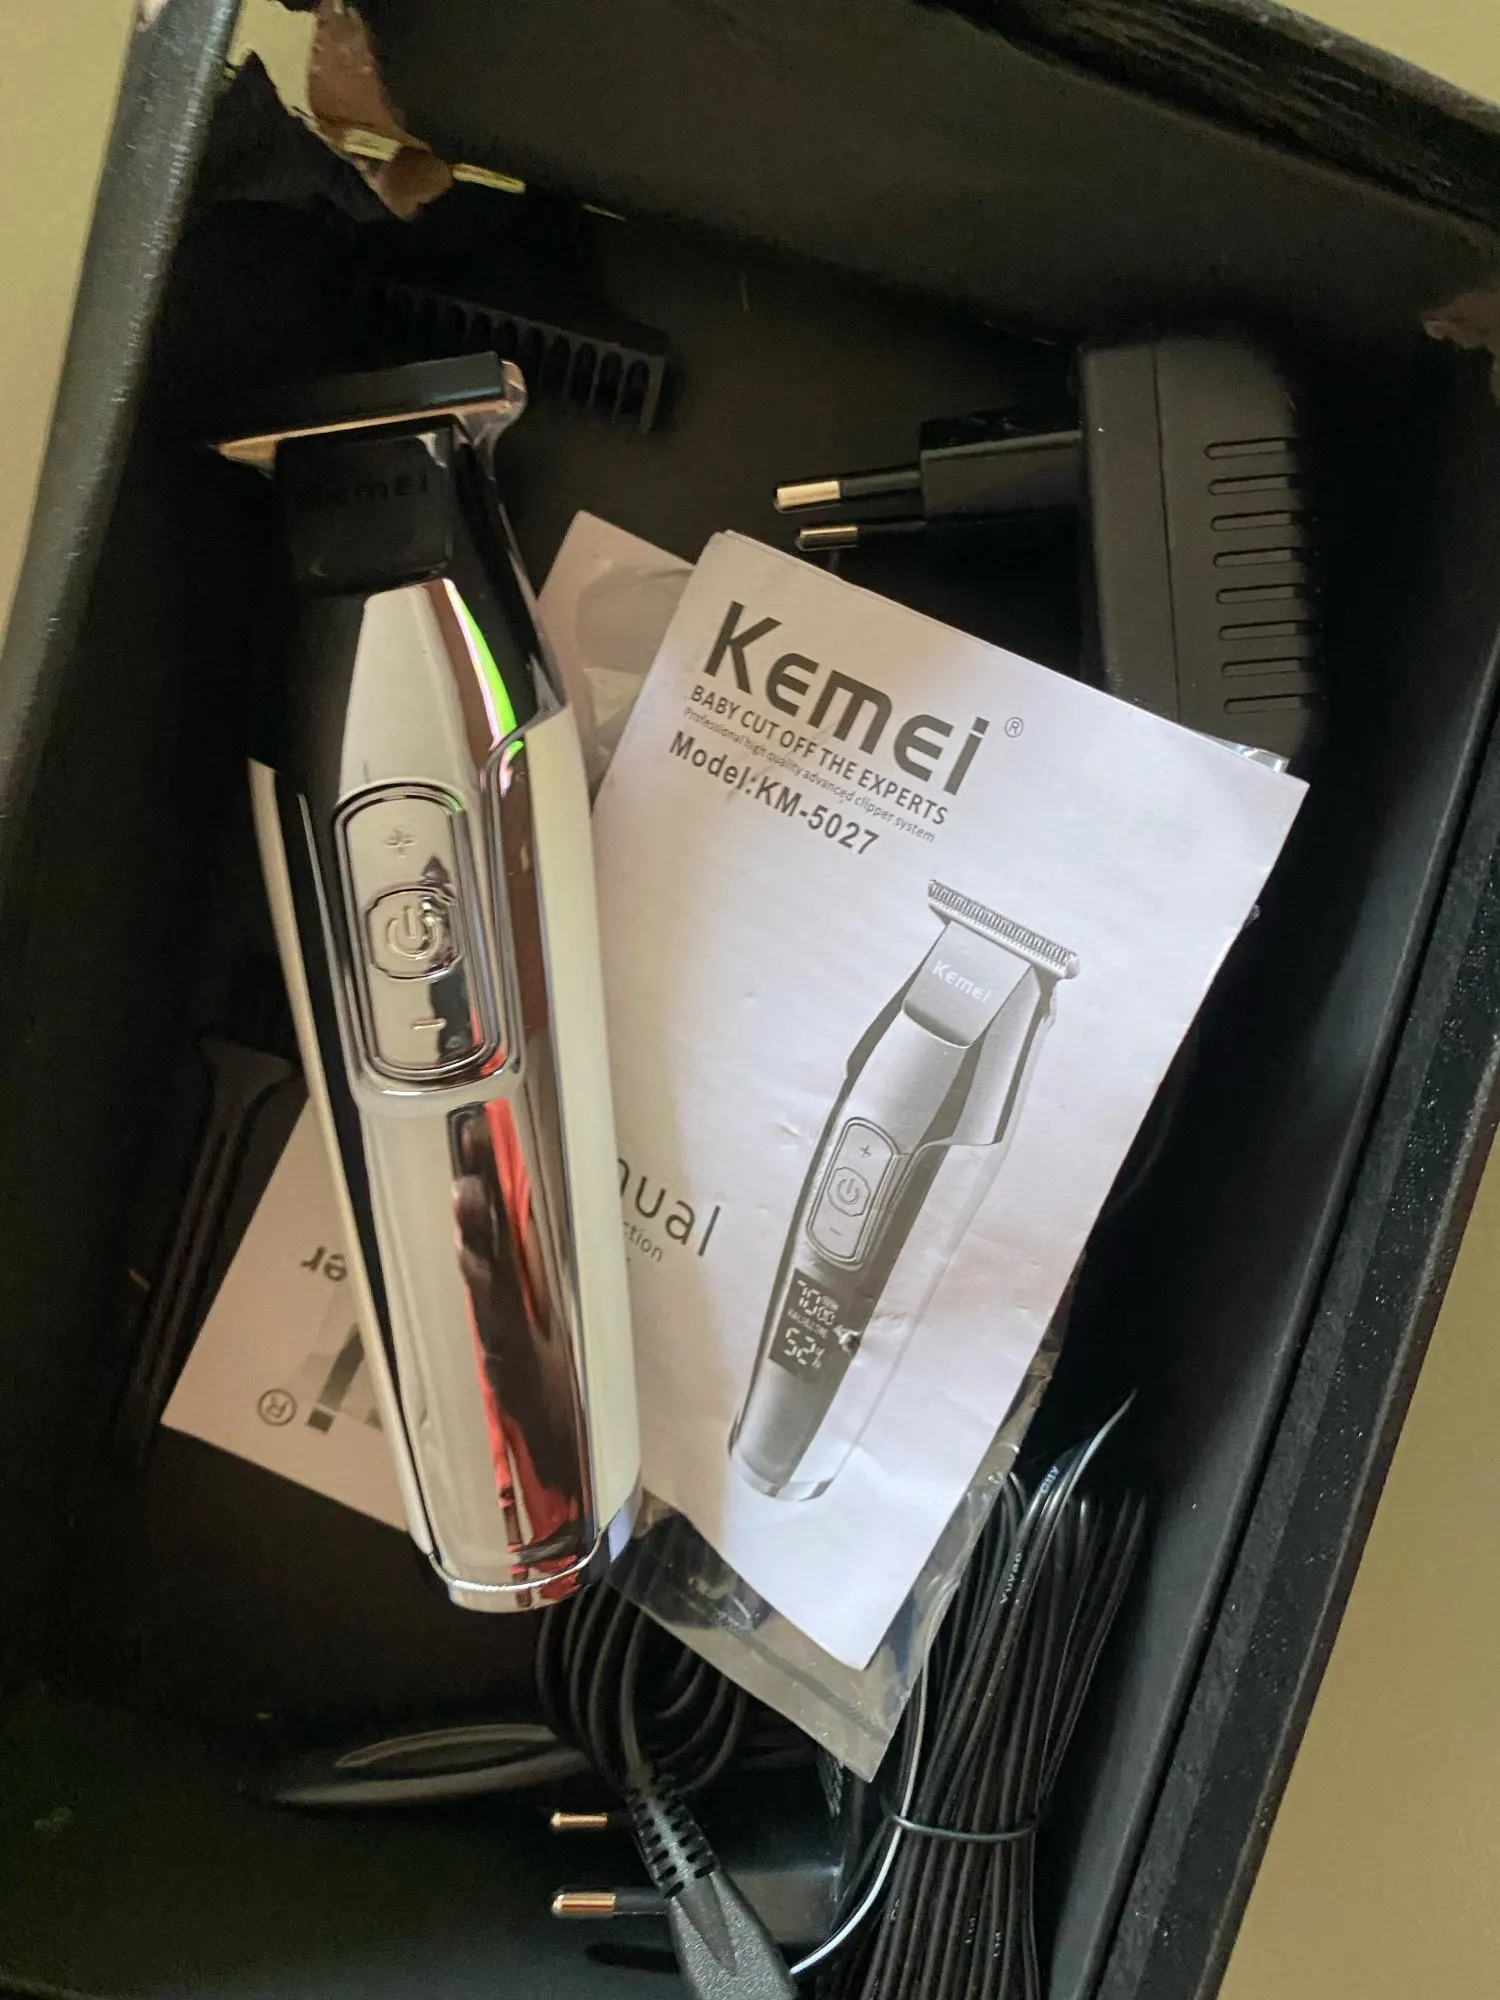 Kemei hair clipper electric hair trimmer barber hair cutter mower hair cutting machine kit combo KM-1987 KM-1986 KM-5027 KM-1102